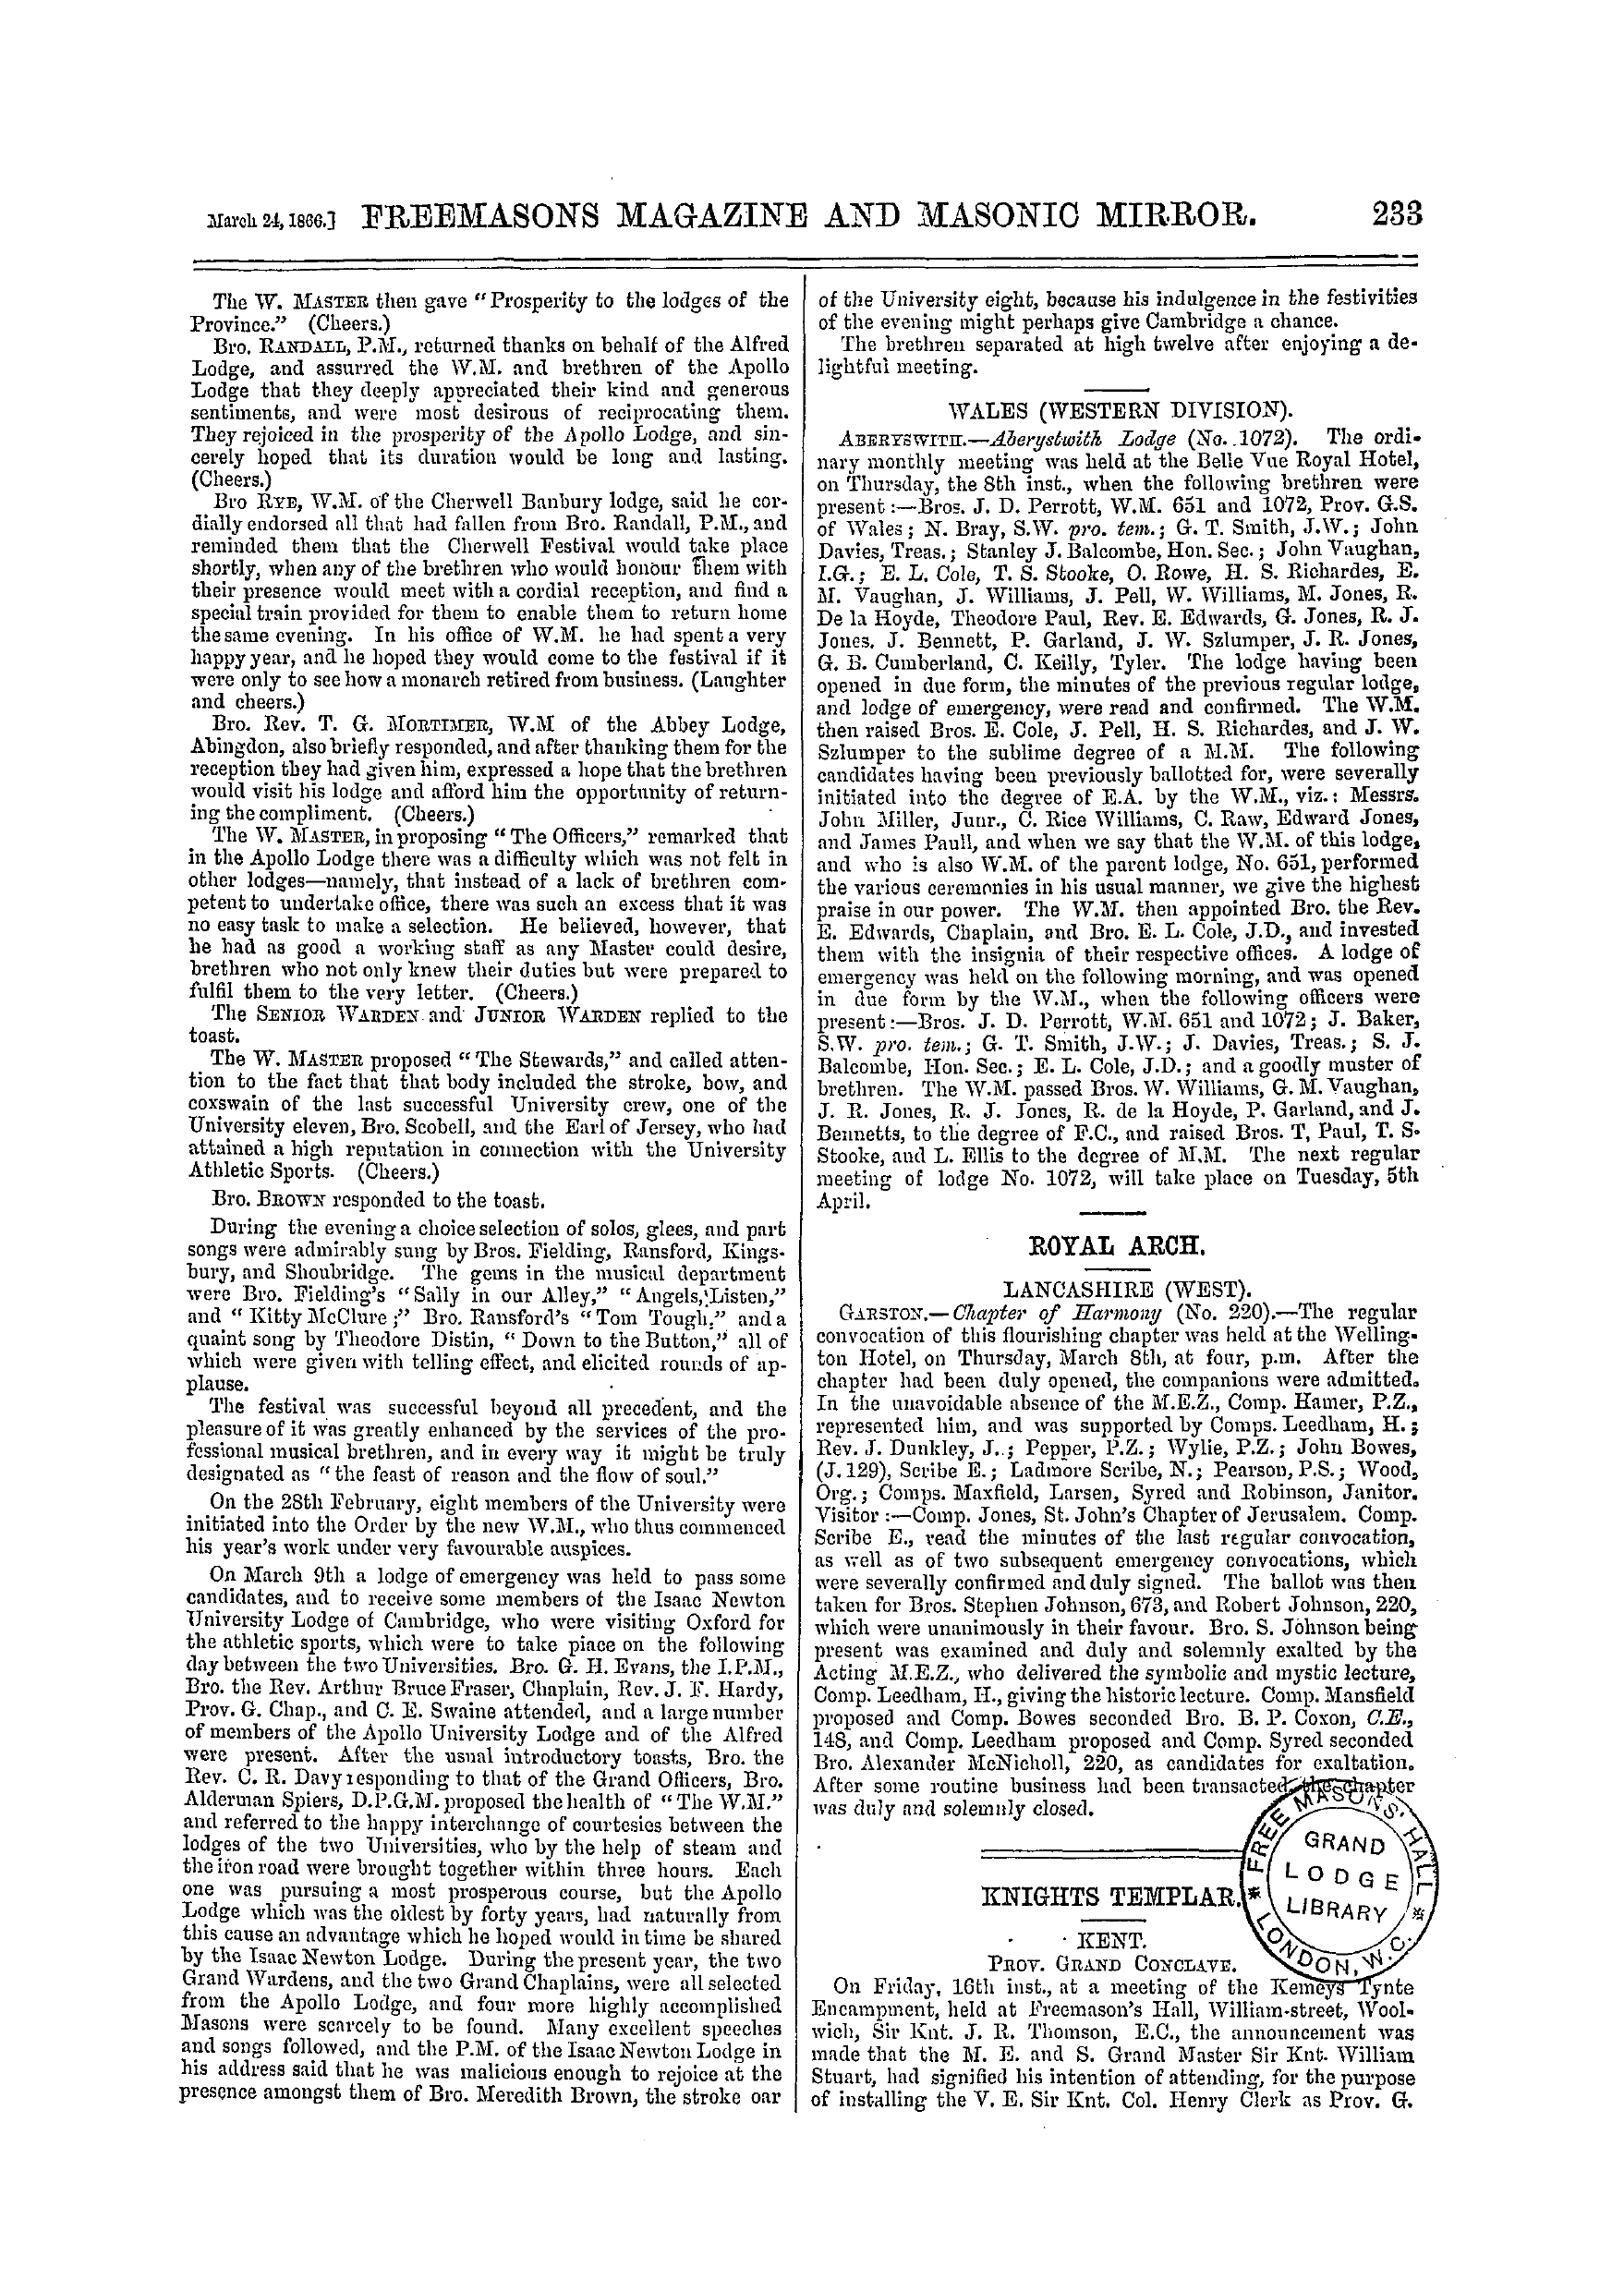 The Freemasons' Monthly Magazine: 1866-03-24 - Provincial.